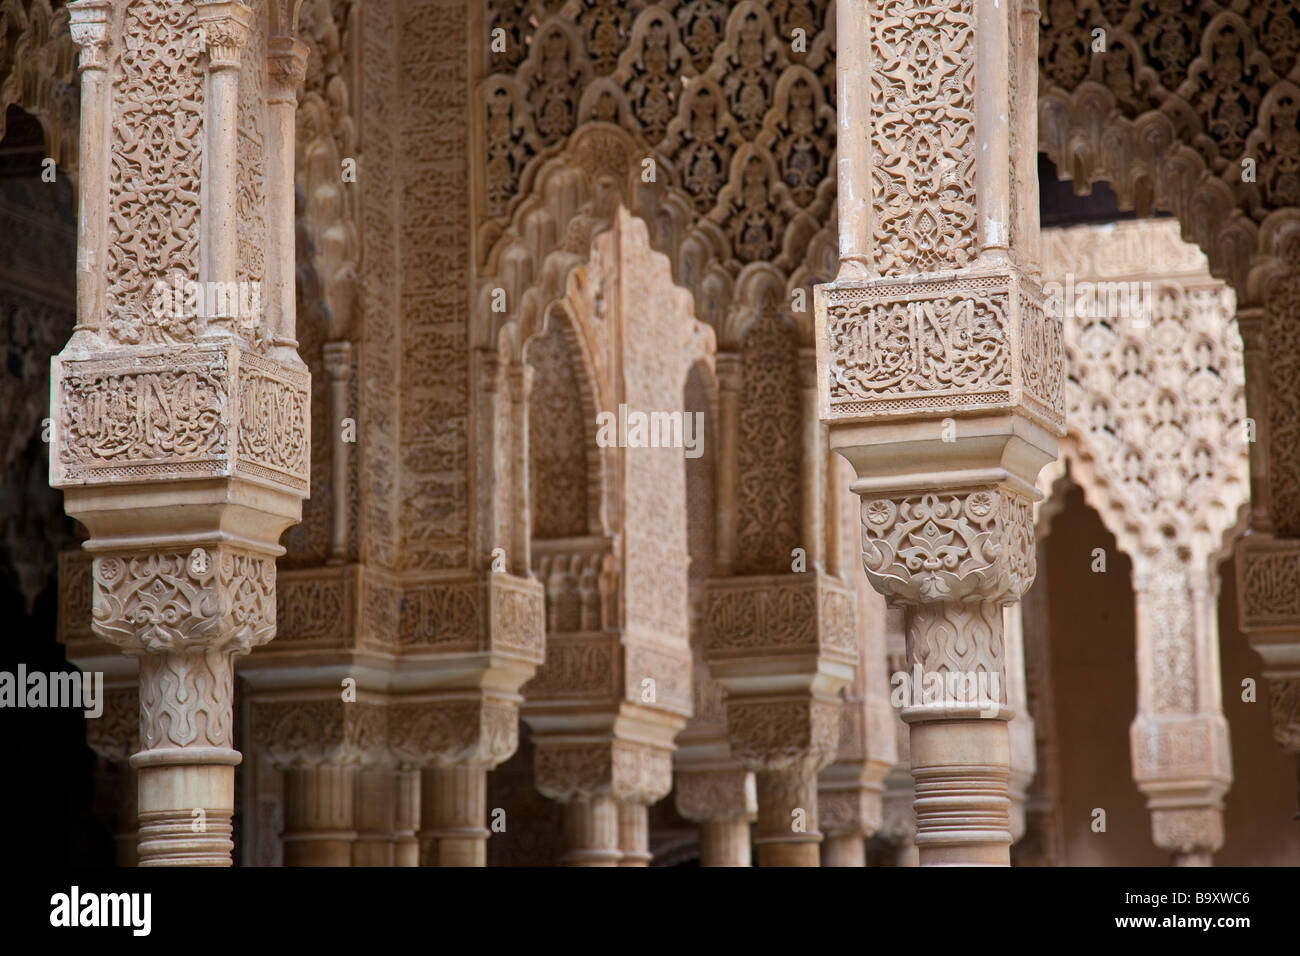 Patio de los Leones in the Palace in the Alhambra in Granada Spain Stock Photo